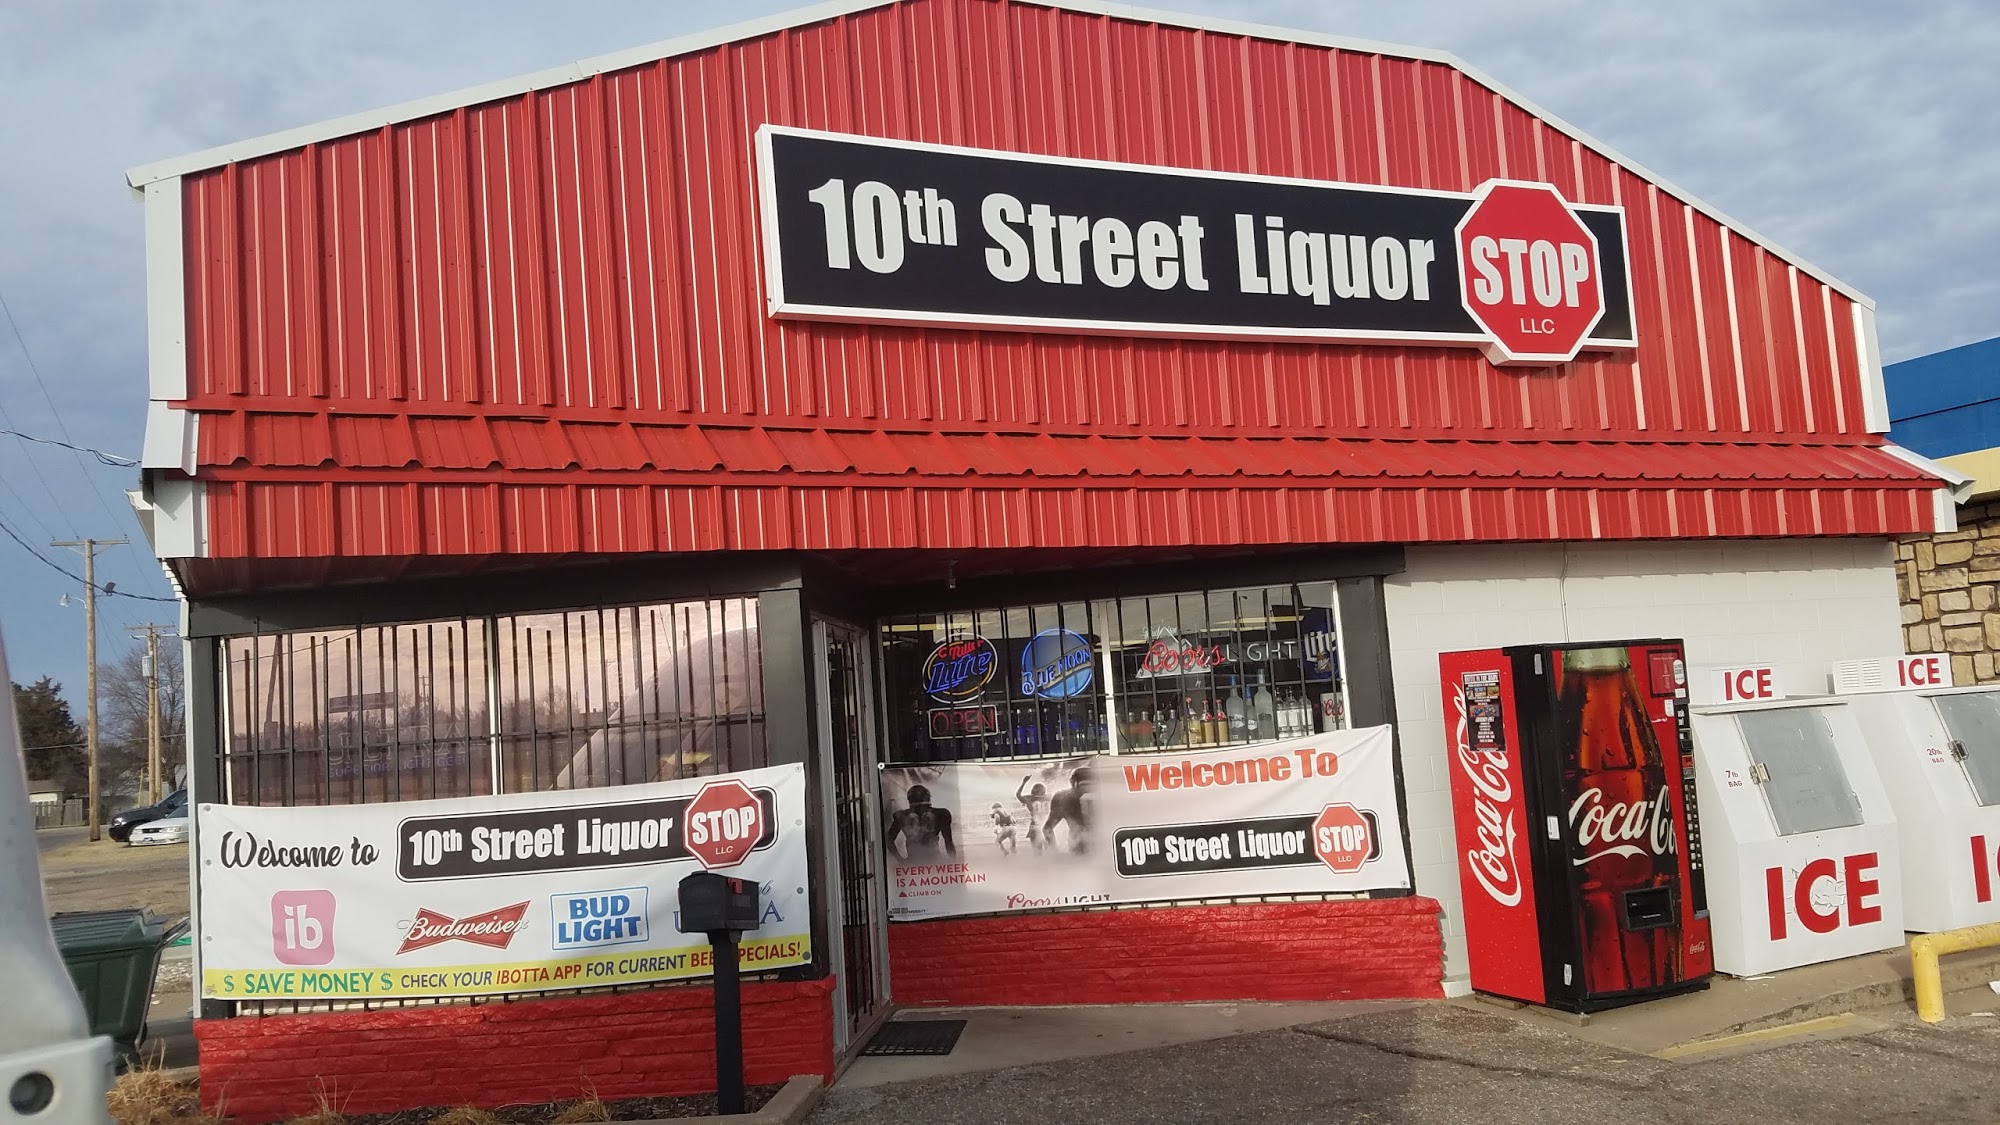 10th Street Liquor Stop